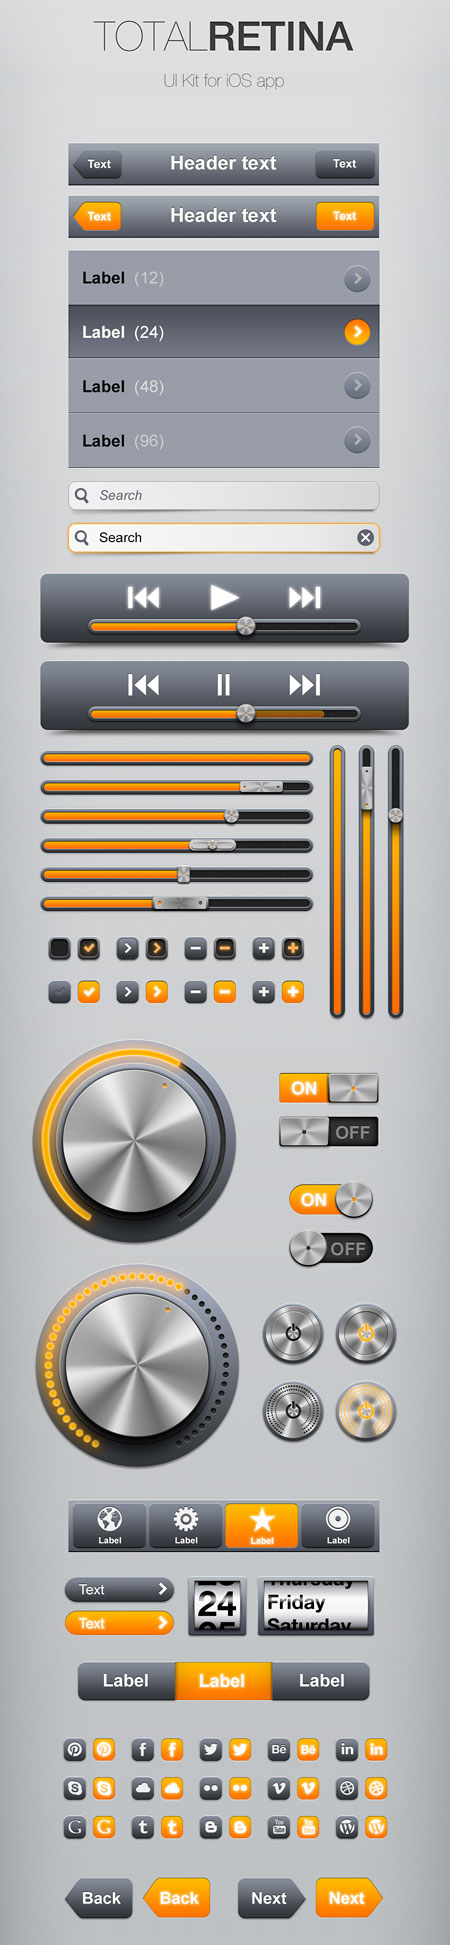 Web-дизайн - Веб-элементы Retina UI Orange